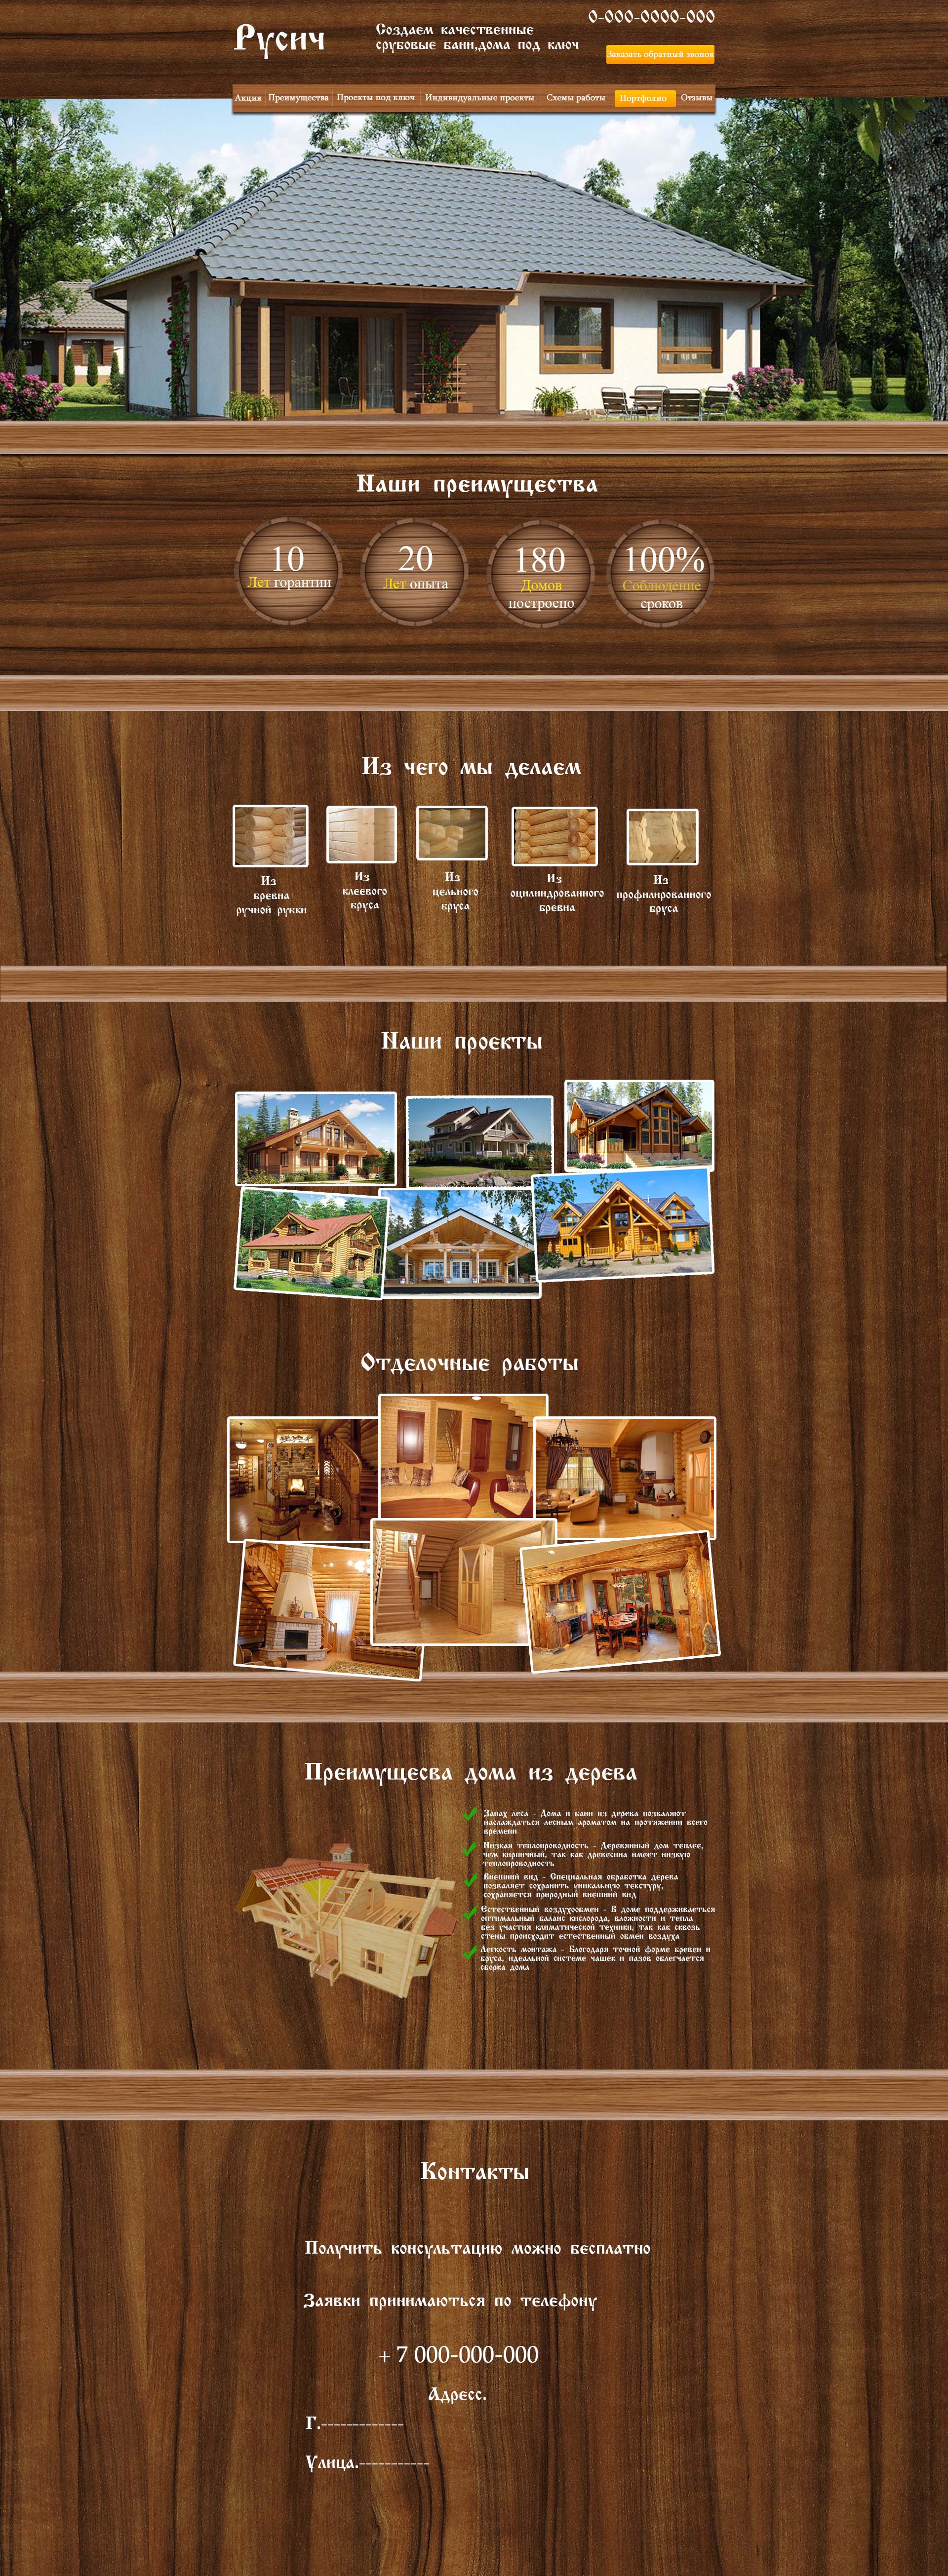 Дизайн Landing Page Дома из дерева за 5 €